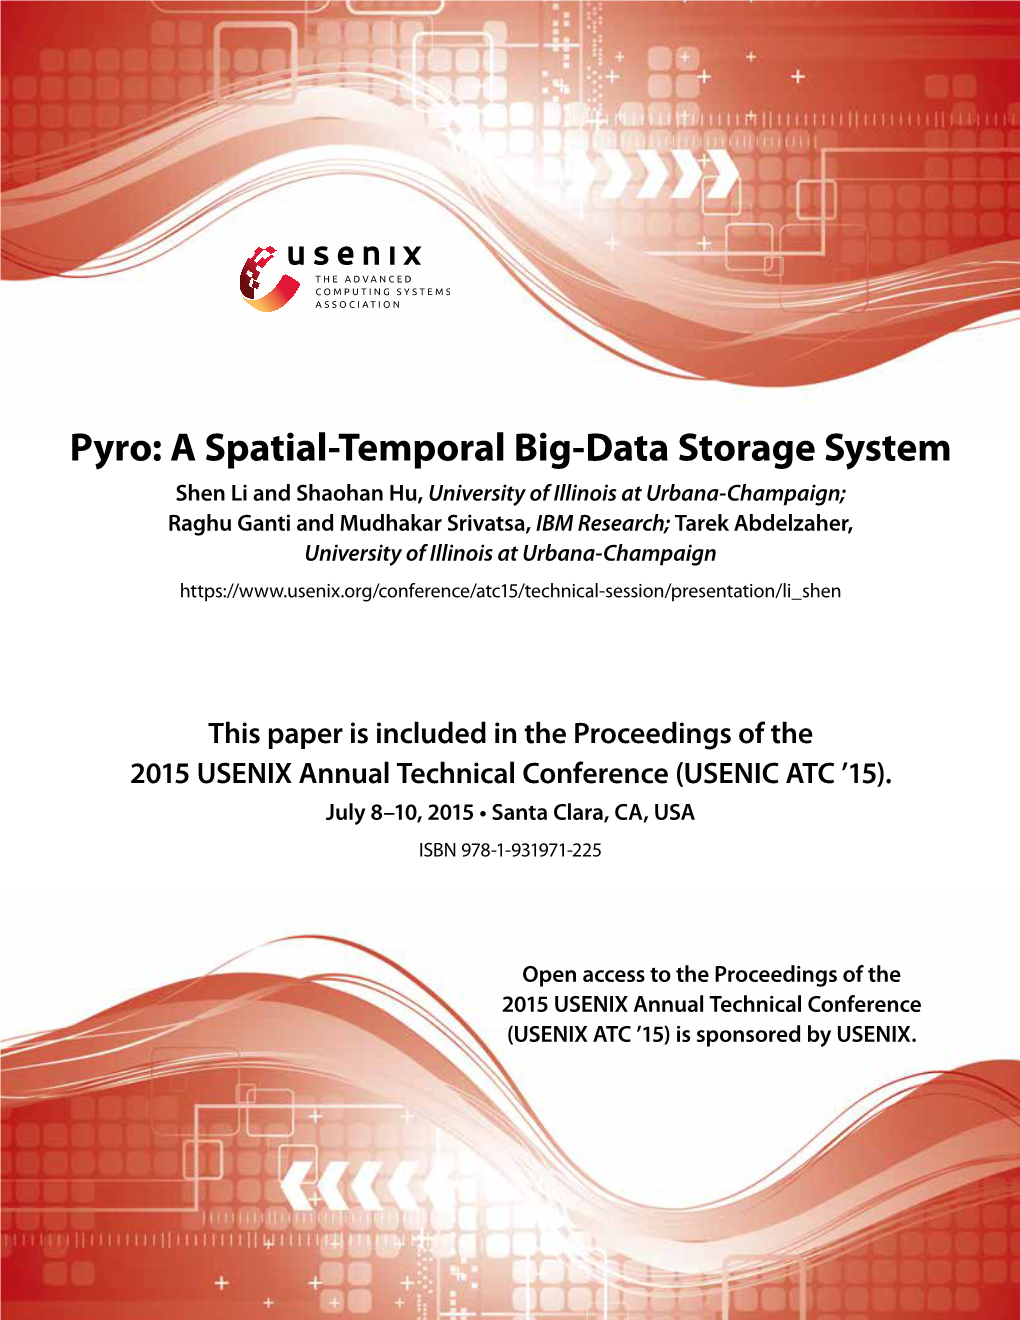 Pyro: a Spatial-Temporal Big-Data Storage System